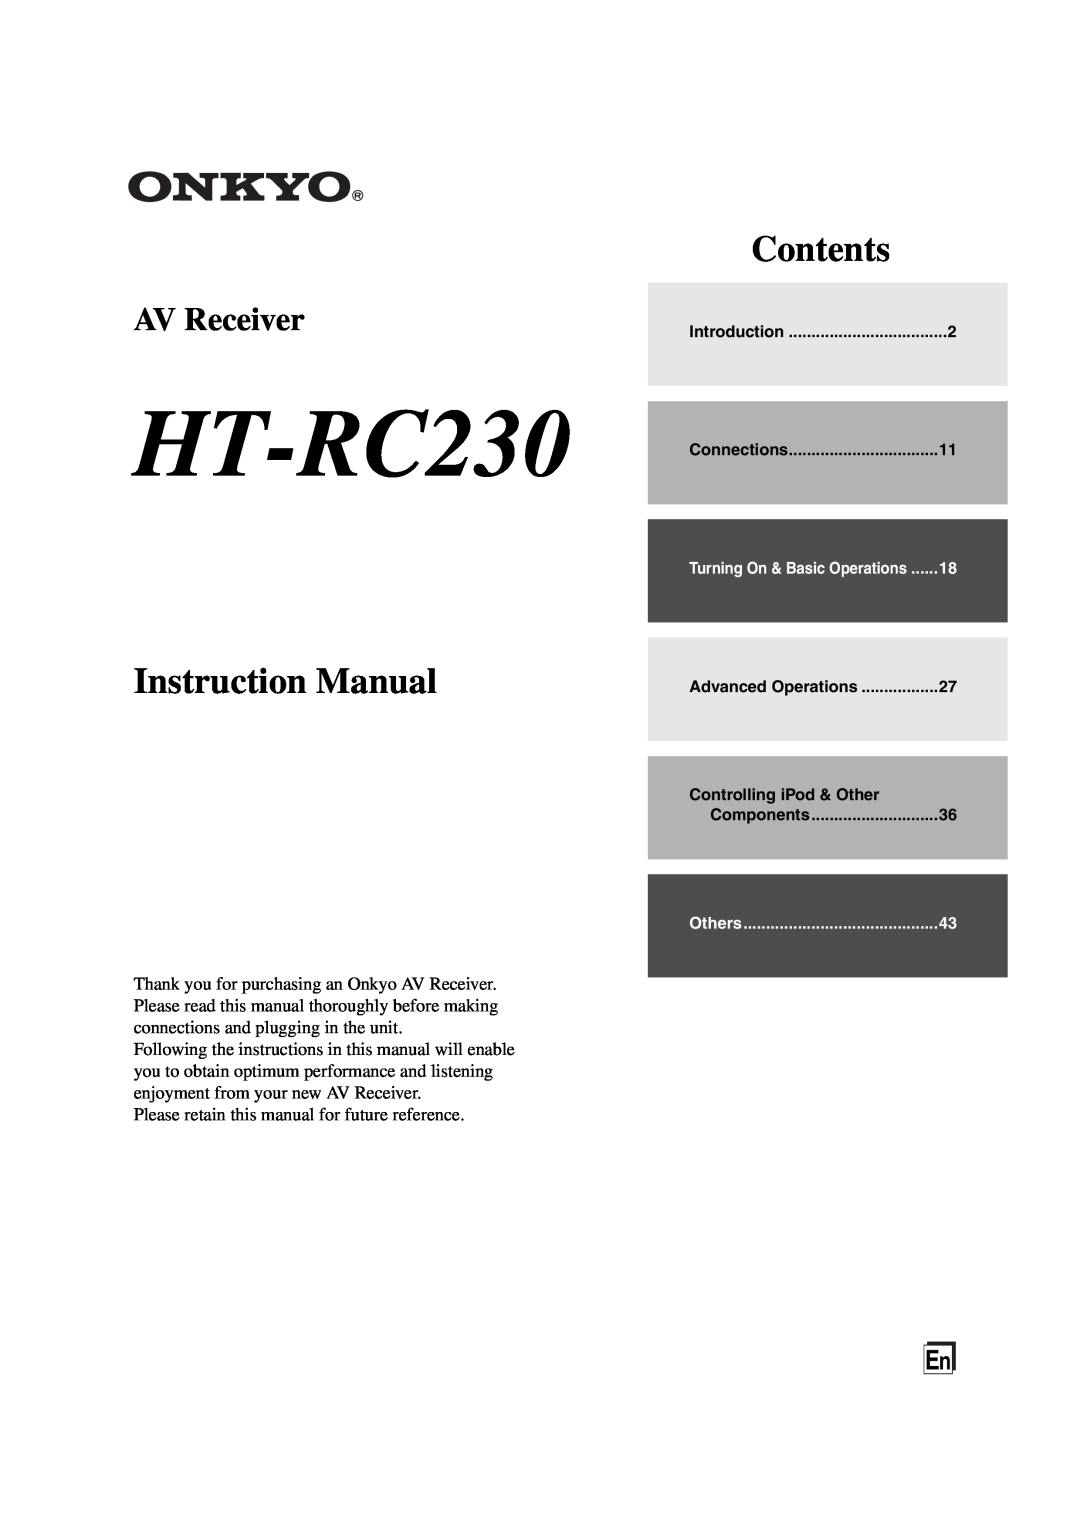 Onkyo 29400468 instruction manual HT-RC230, Contents, AV Receiver 